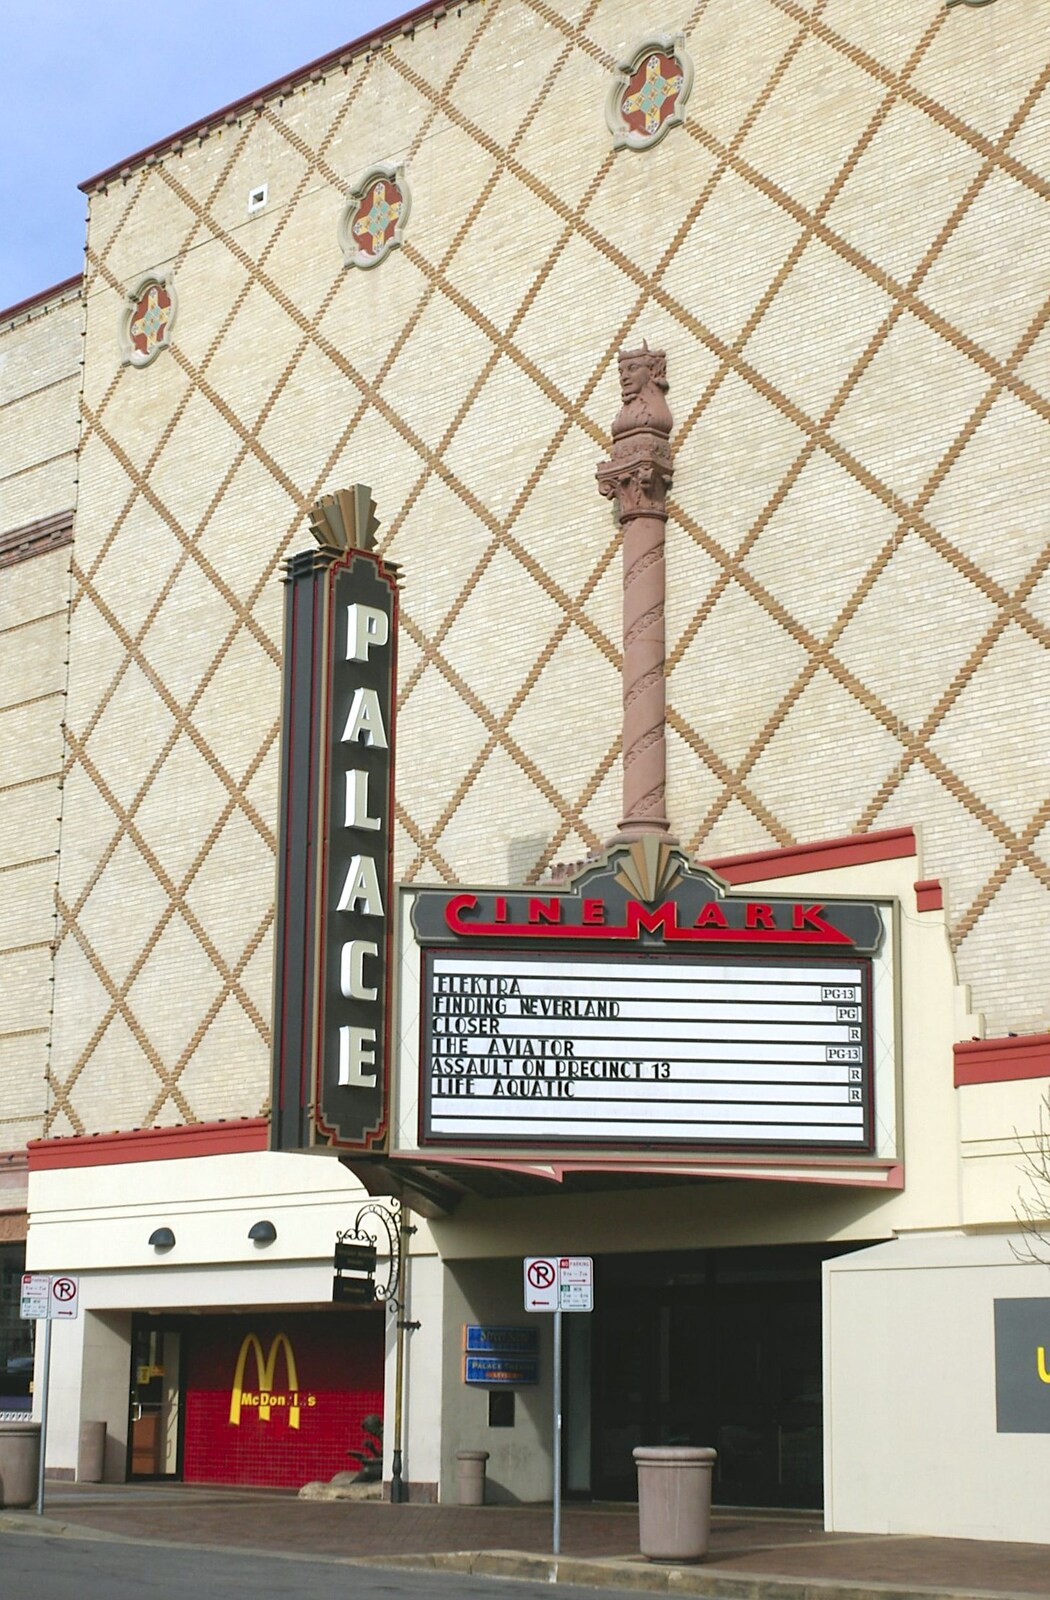 A Visit to Sprint, Overland Park, Kansas City, Missouri, US - 16th January 2005: The Palace cinema sign